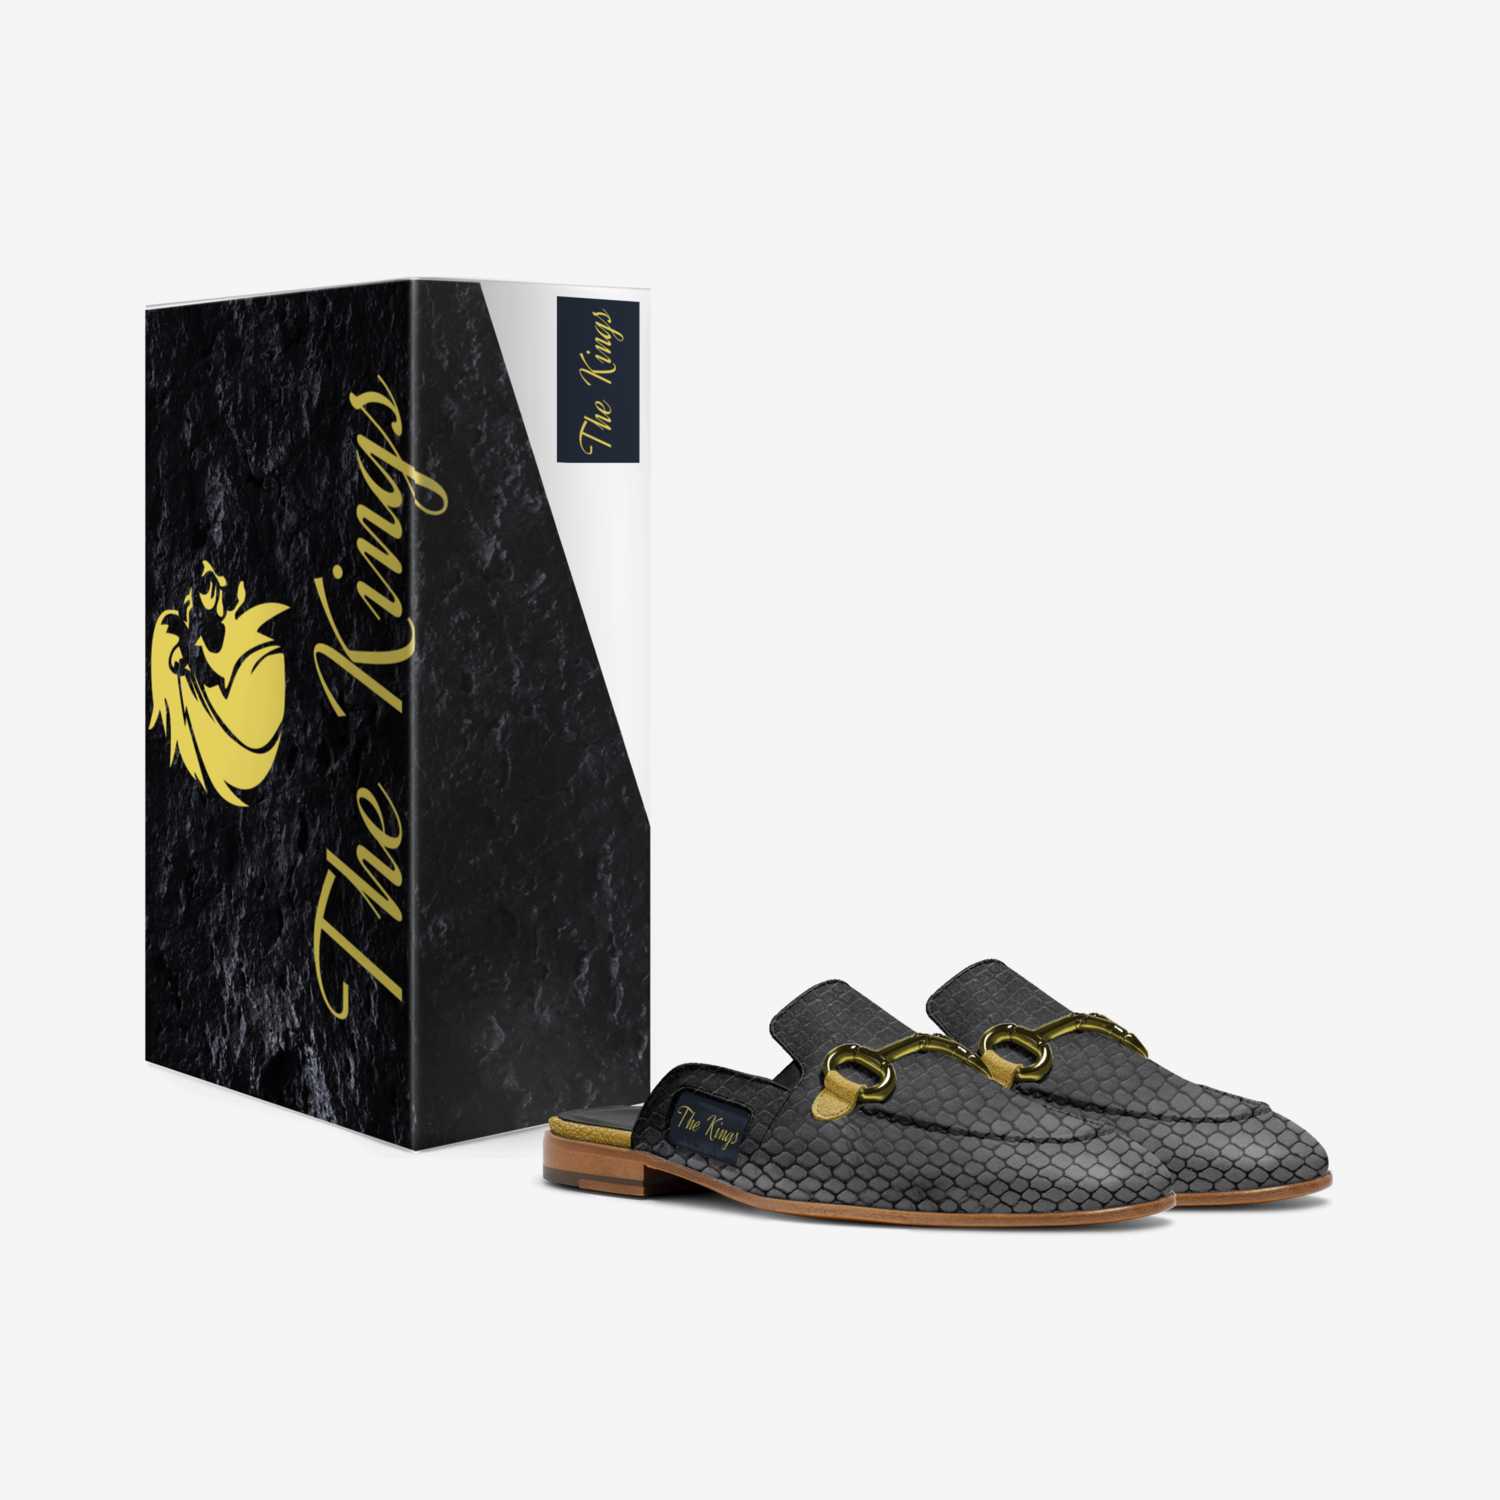 Escobar custom made in Italy shoes by Ahmed F M Hamdan | Box view